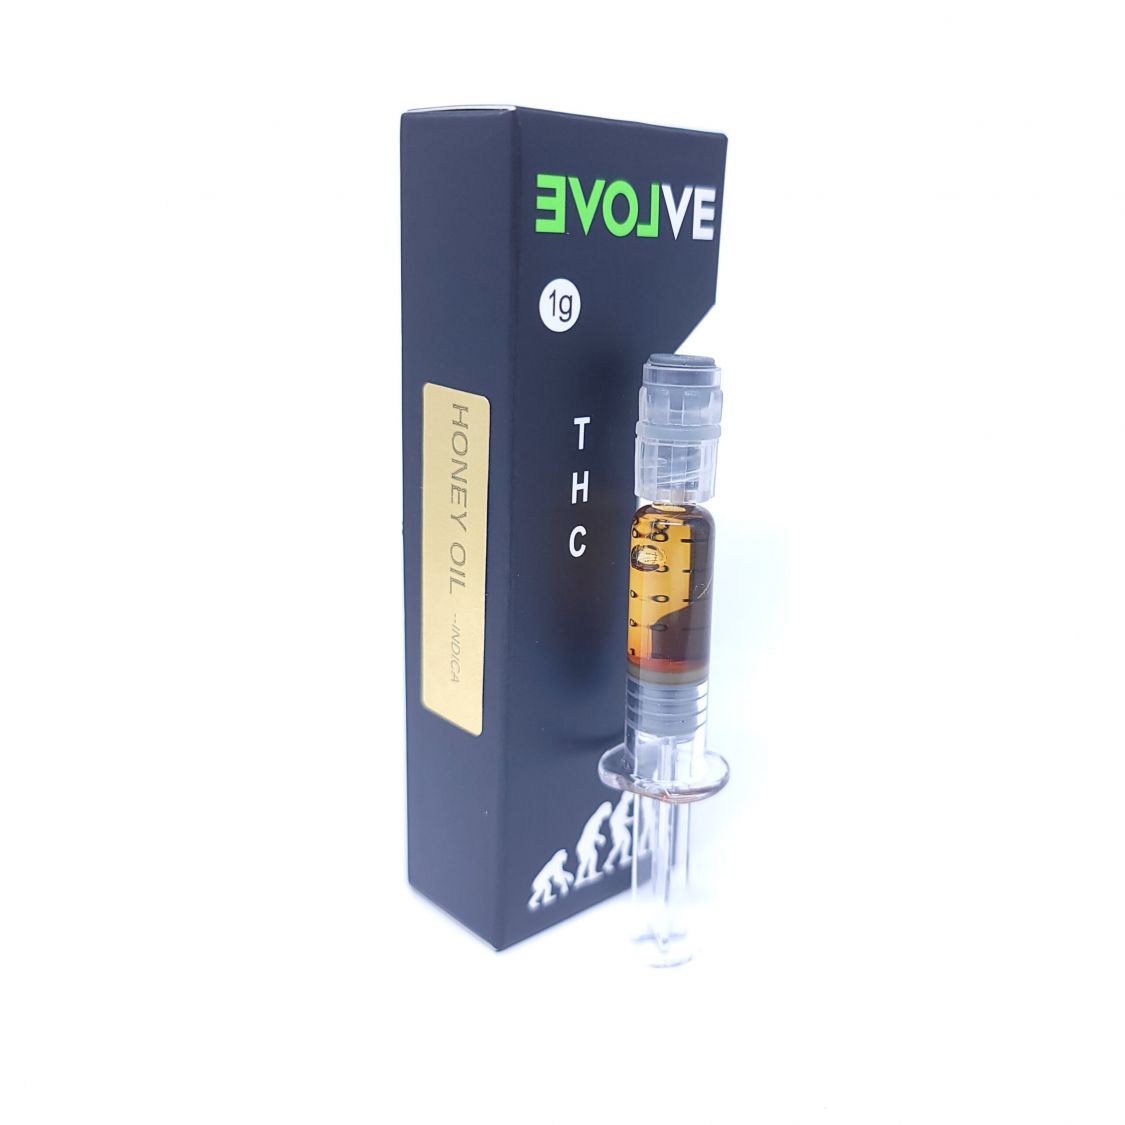 Evolve Honey Oil 1ml – Sativa Concentrates Oil